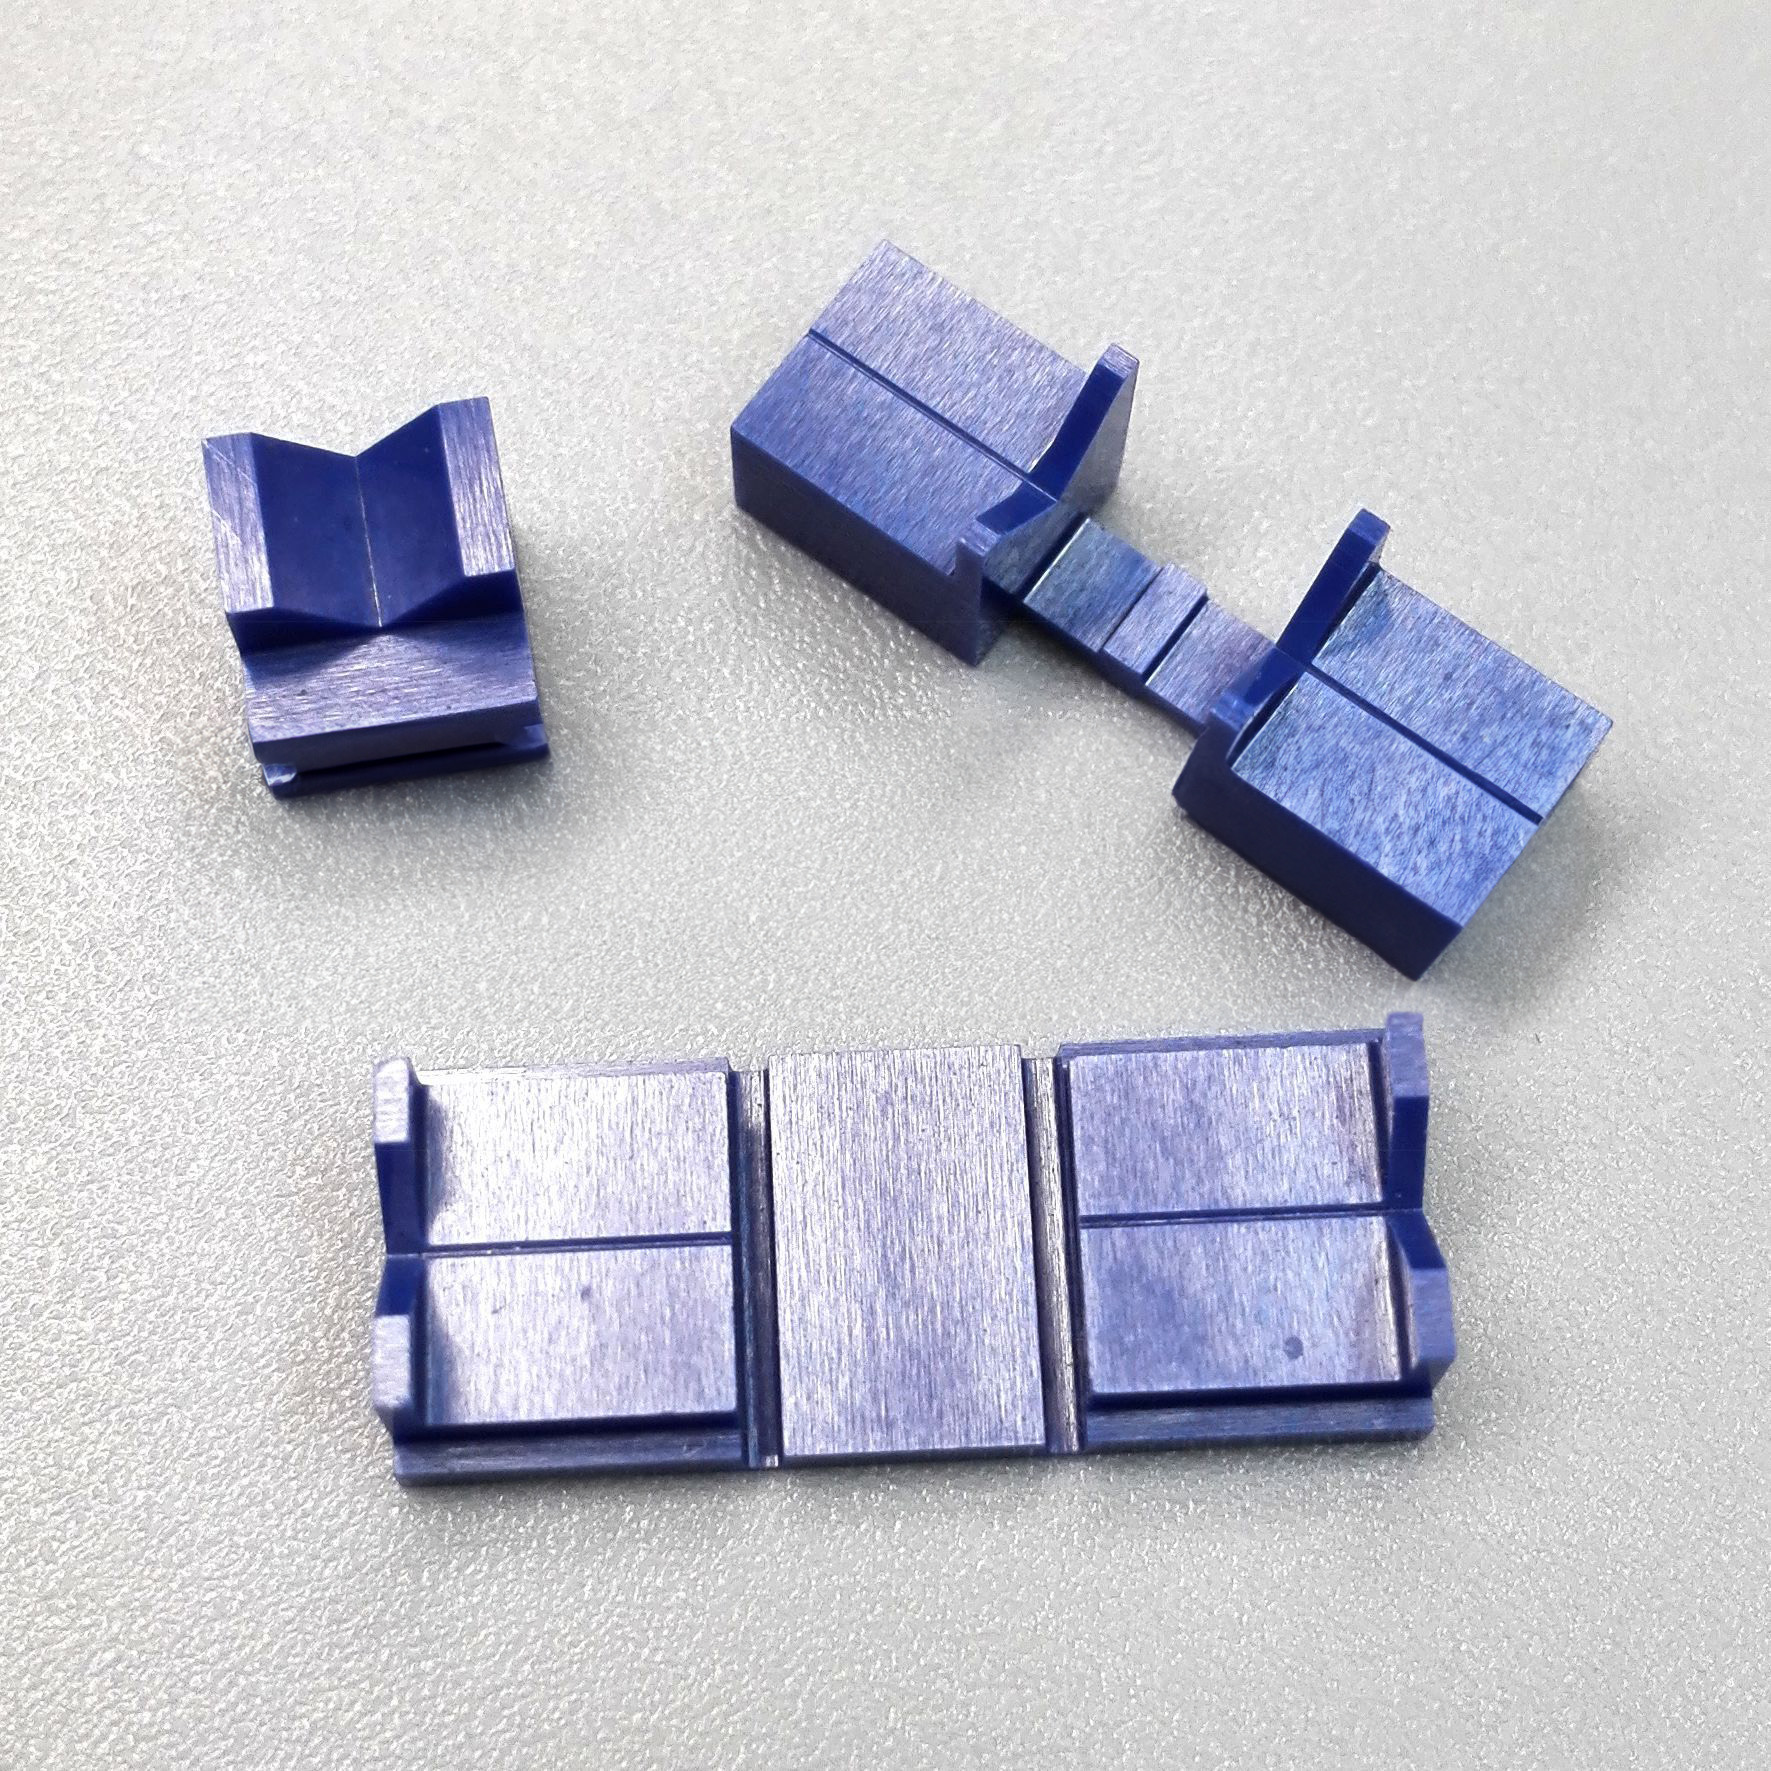 Blaue Zirkoniumoxid-Keramikbearbeitung